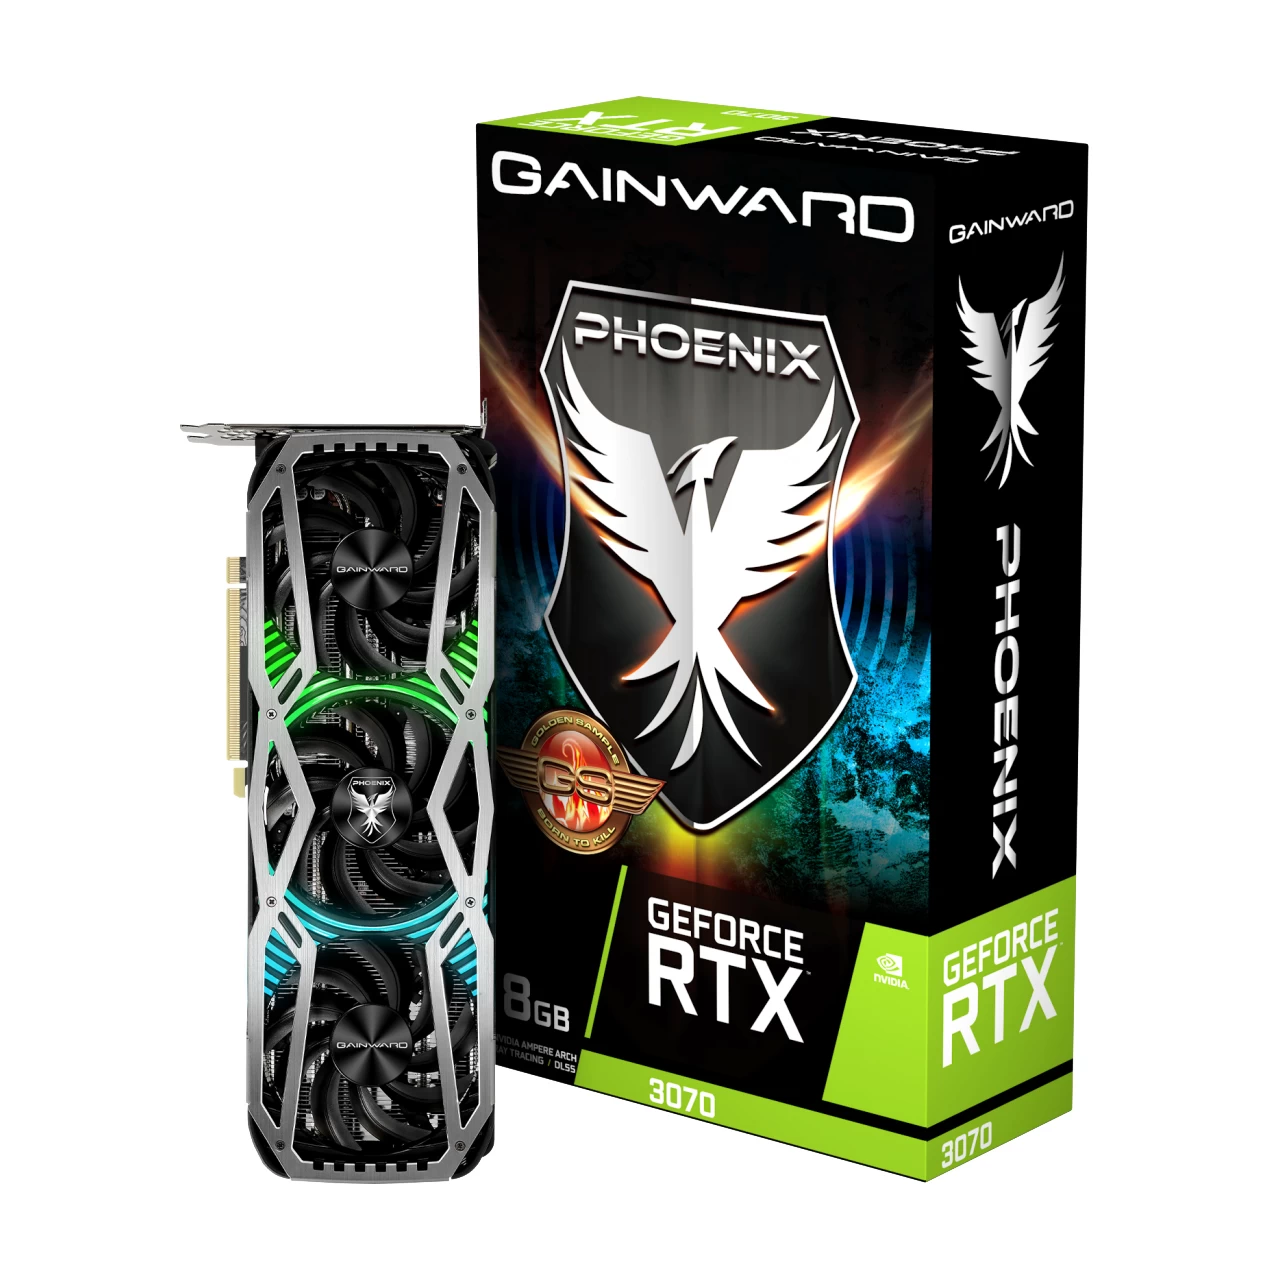 Gainward GeForce RTX 3070 Phoenix GS Package